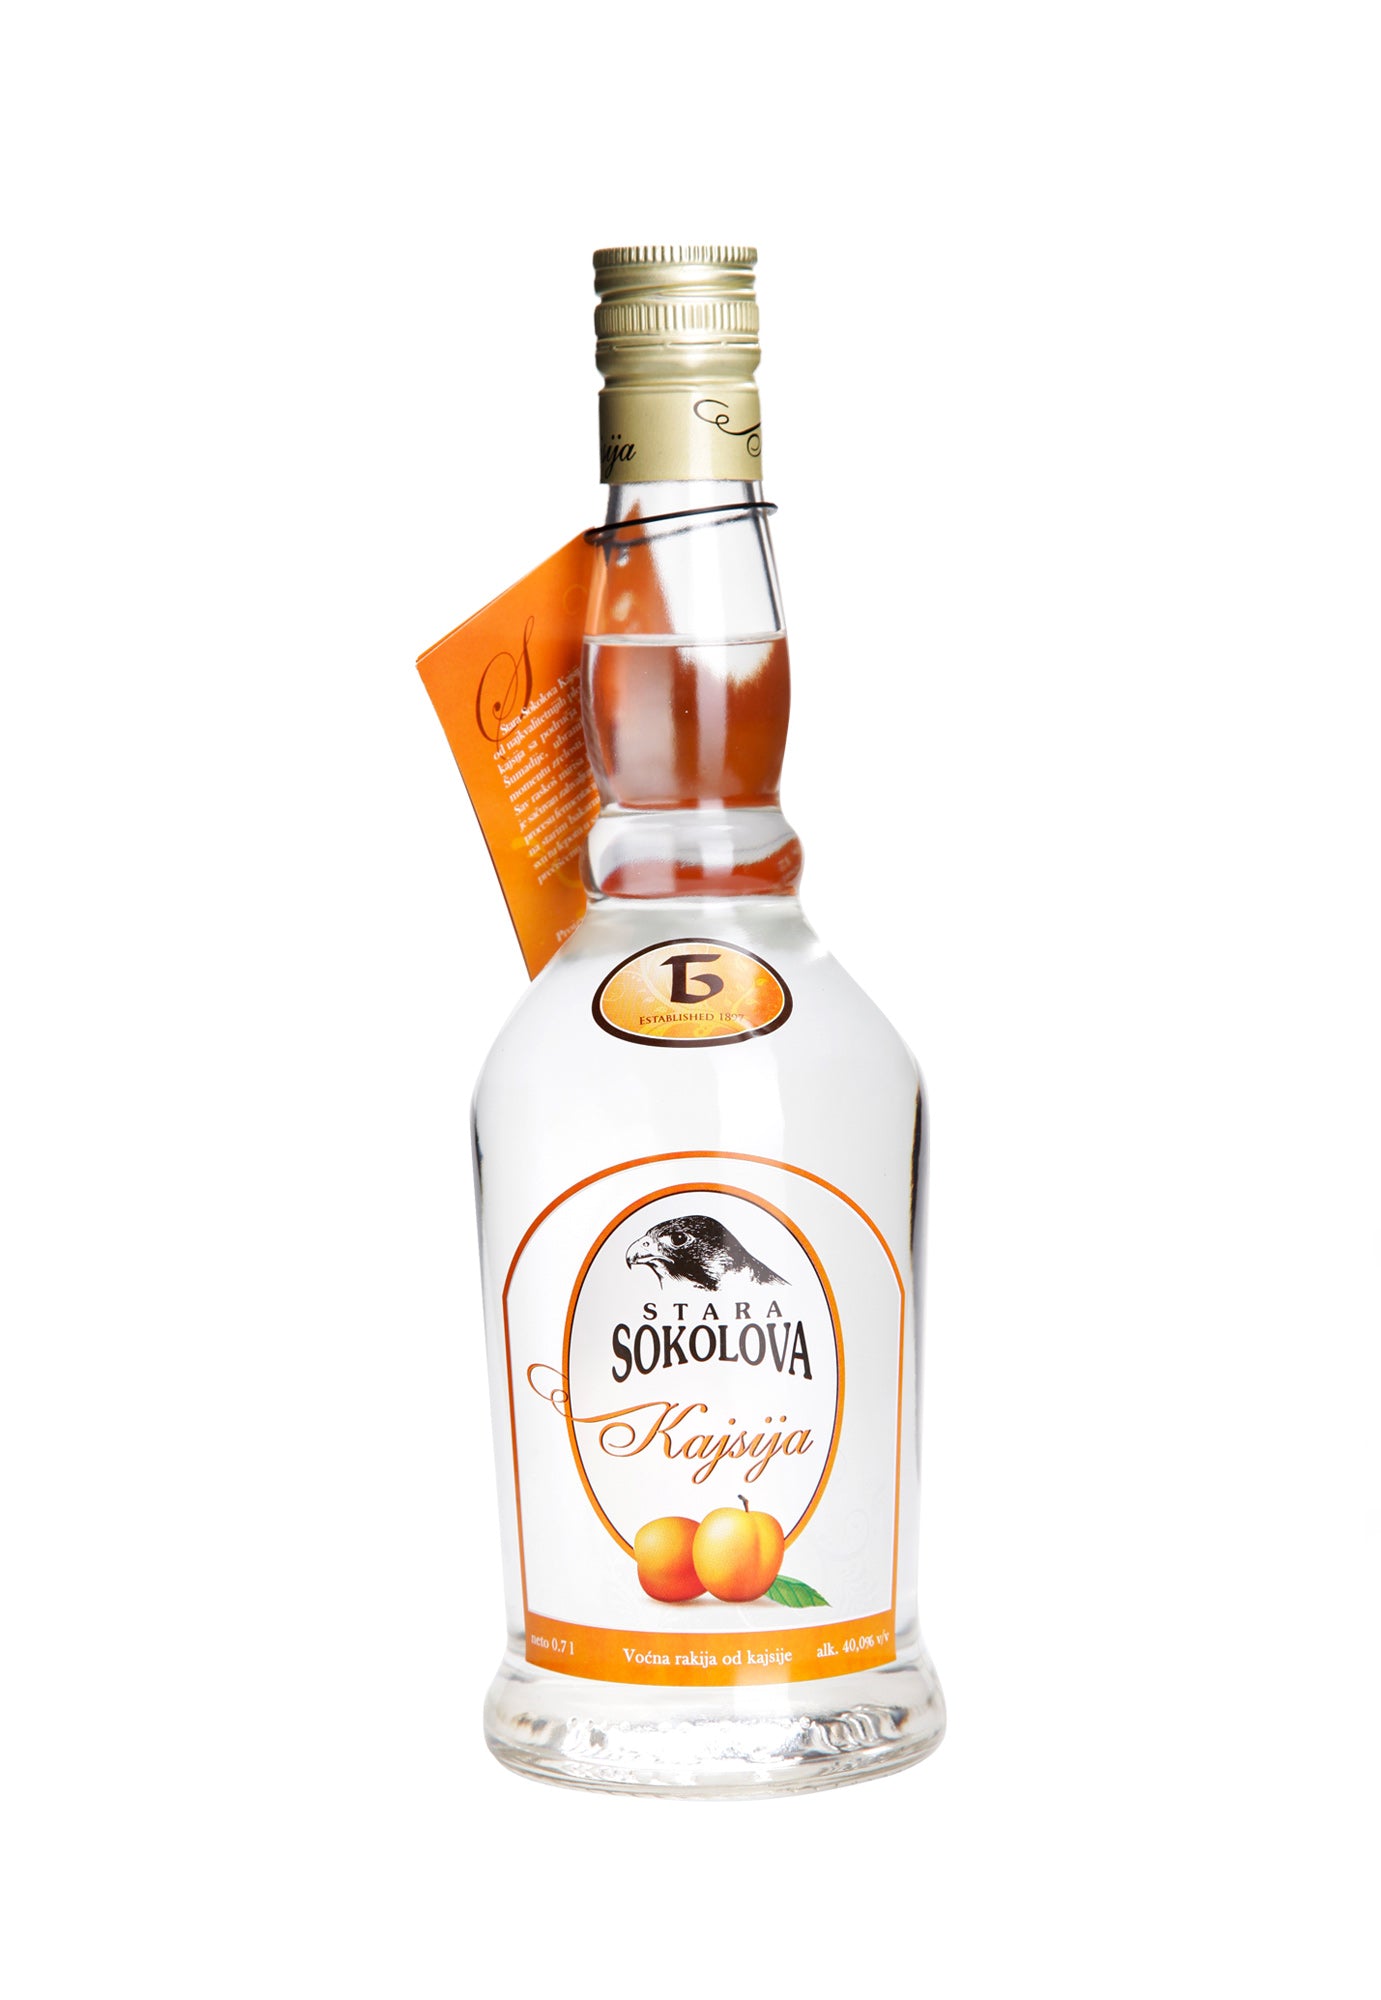 Stara Sokolova Apricot Brandy